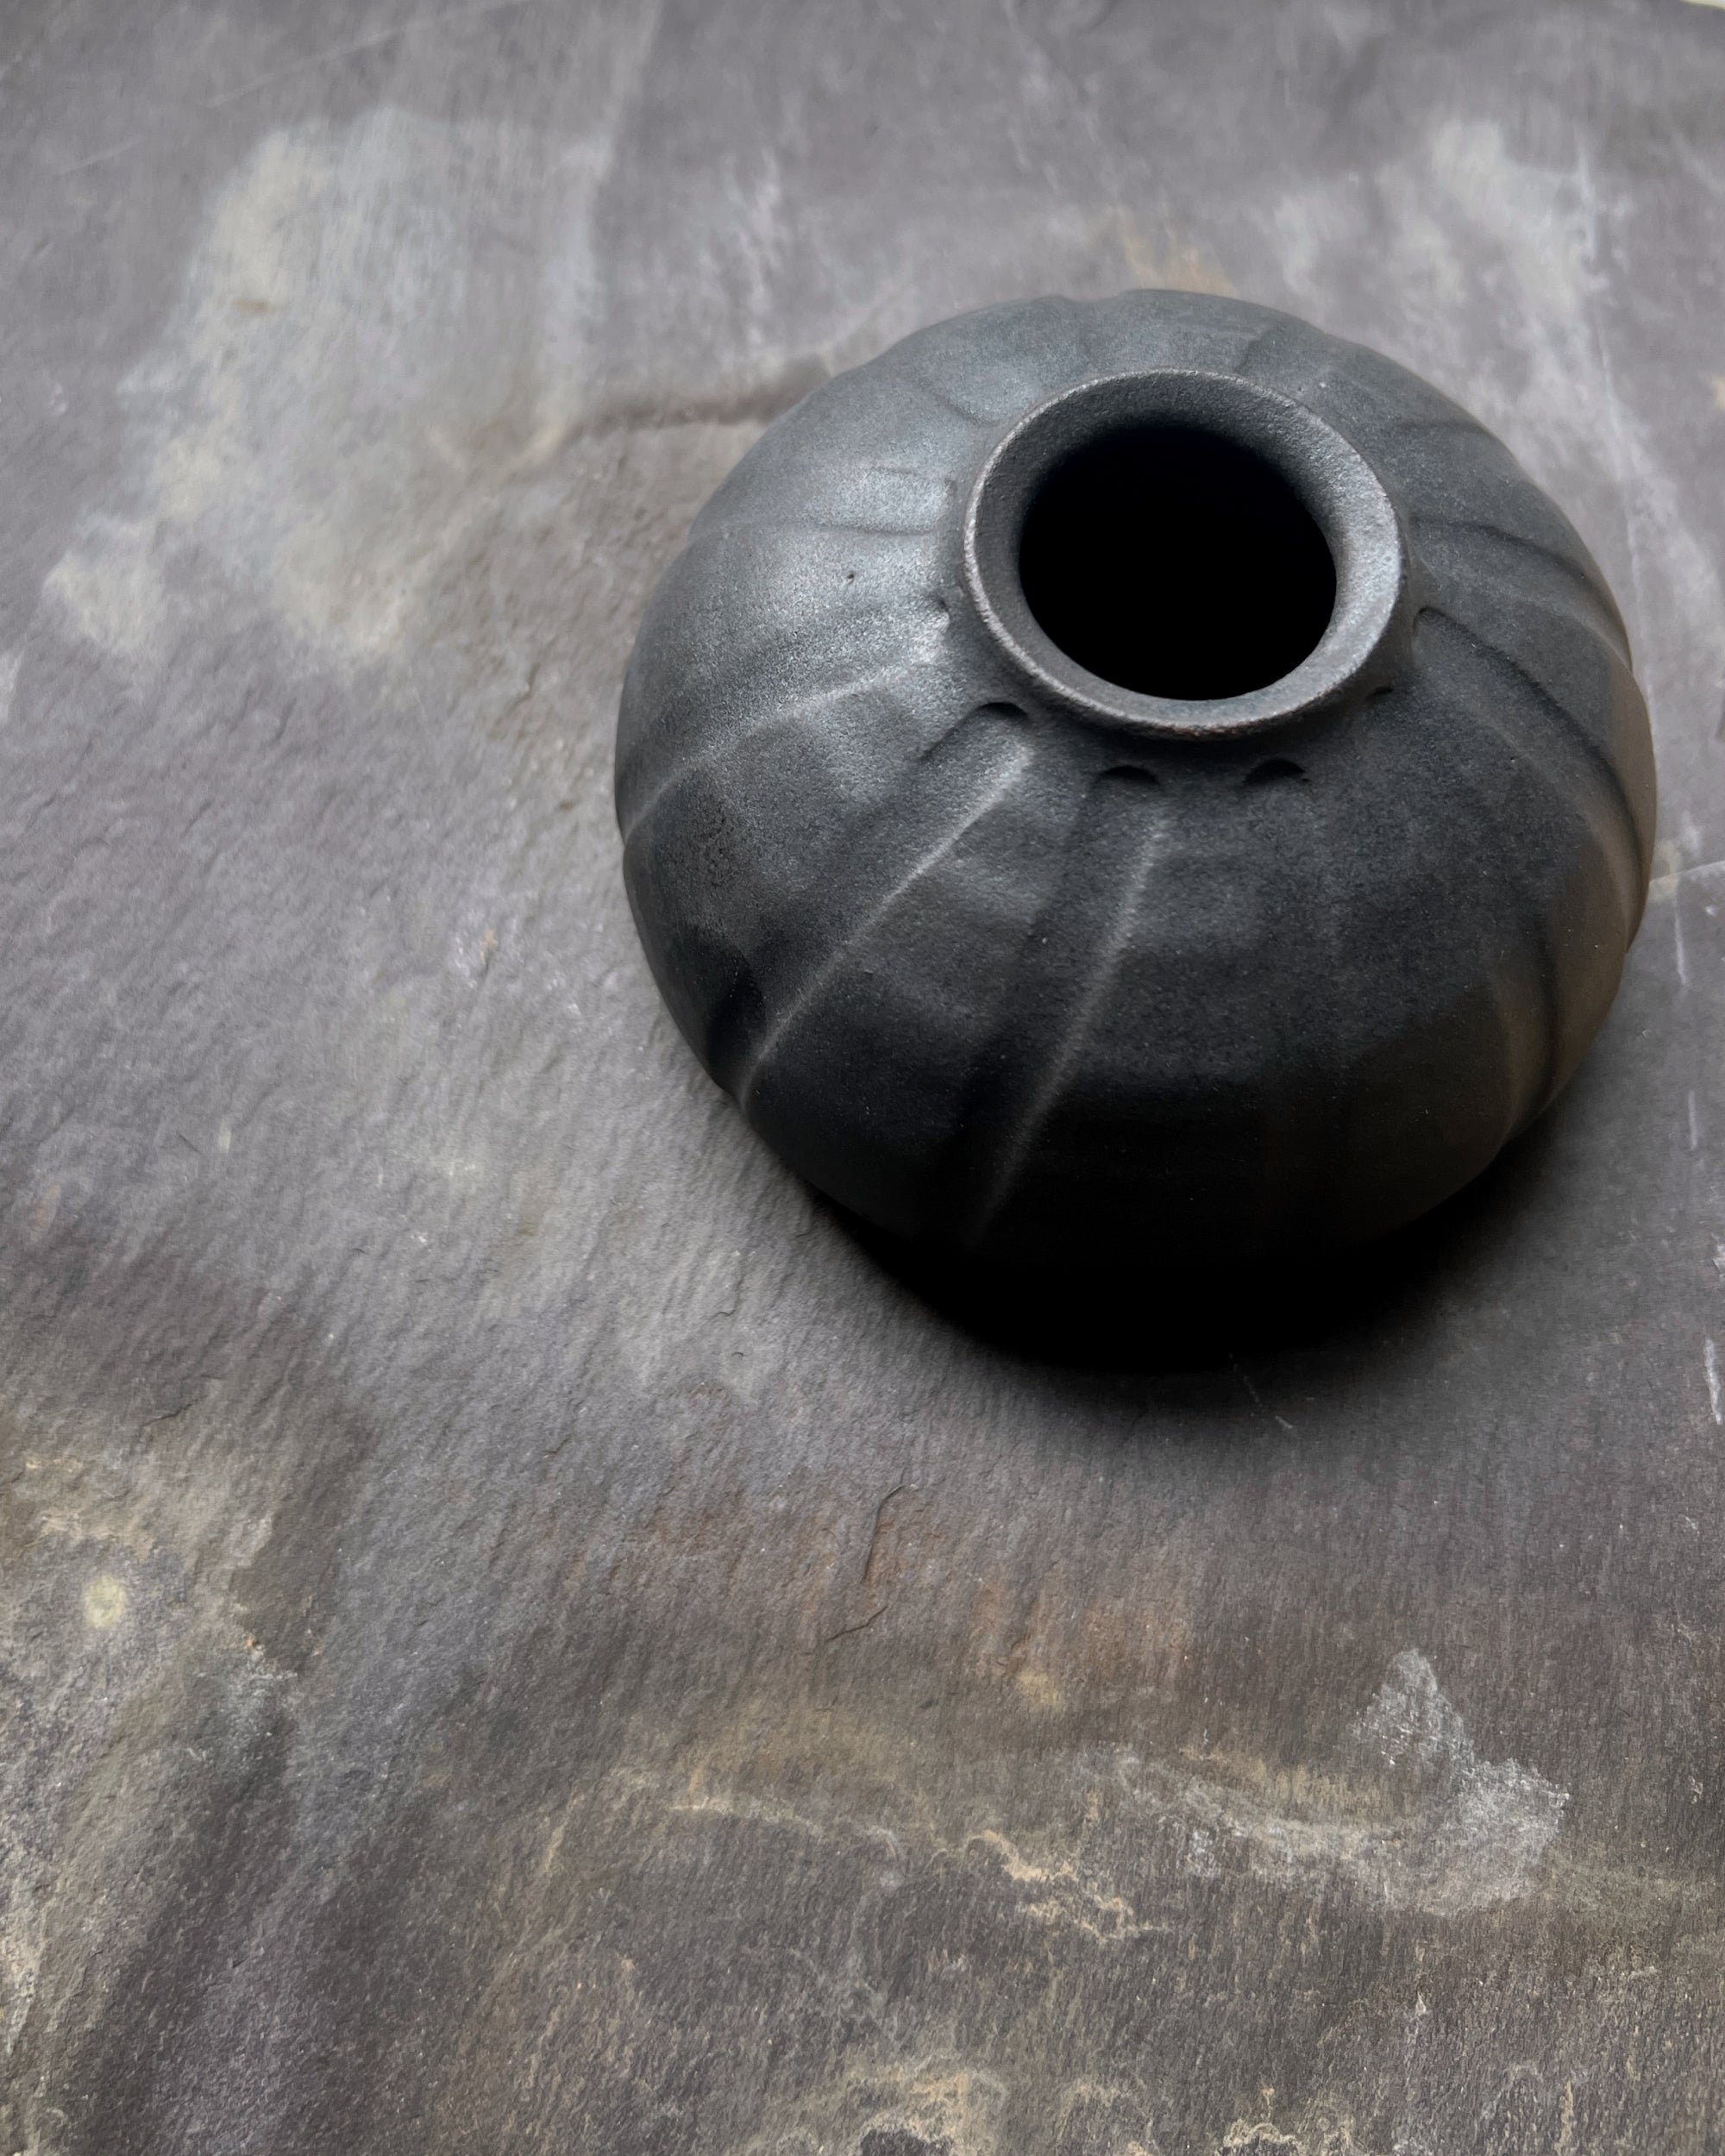 wakasama : ceramic vase 04